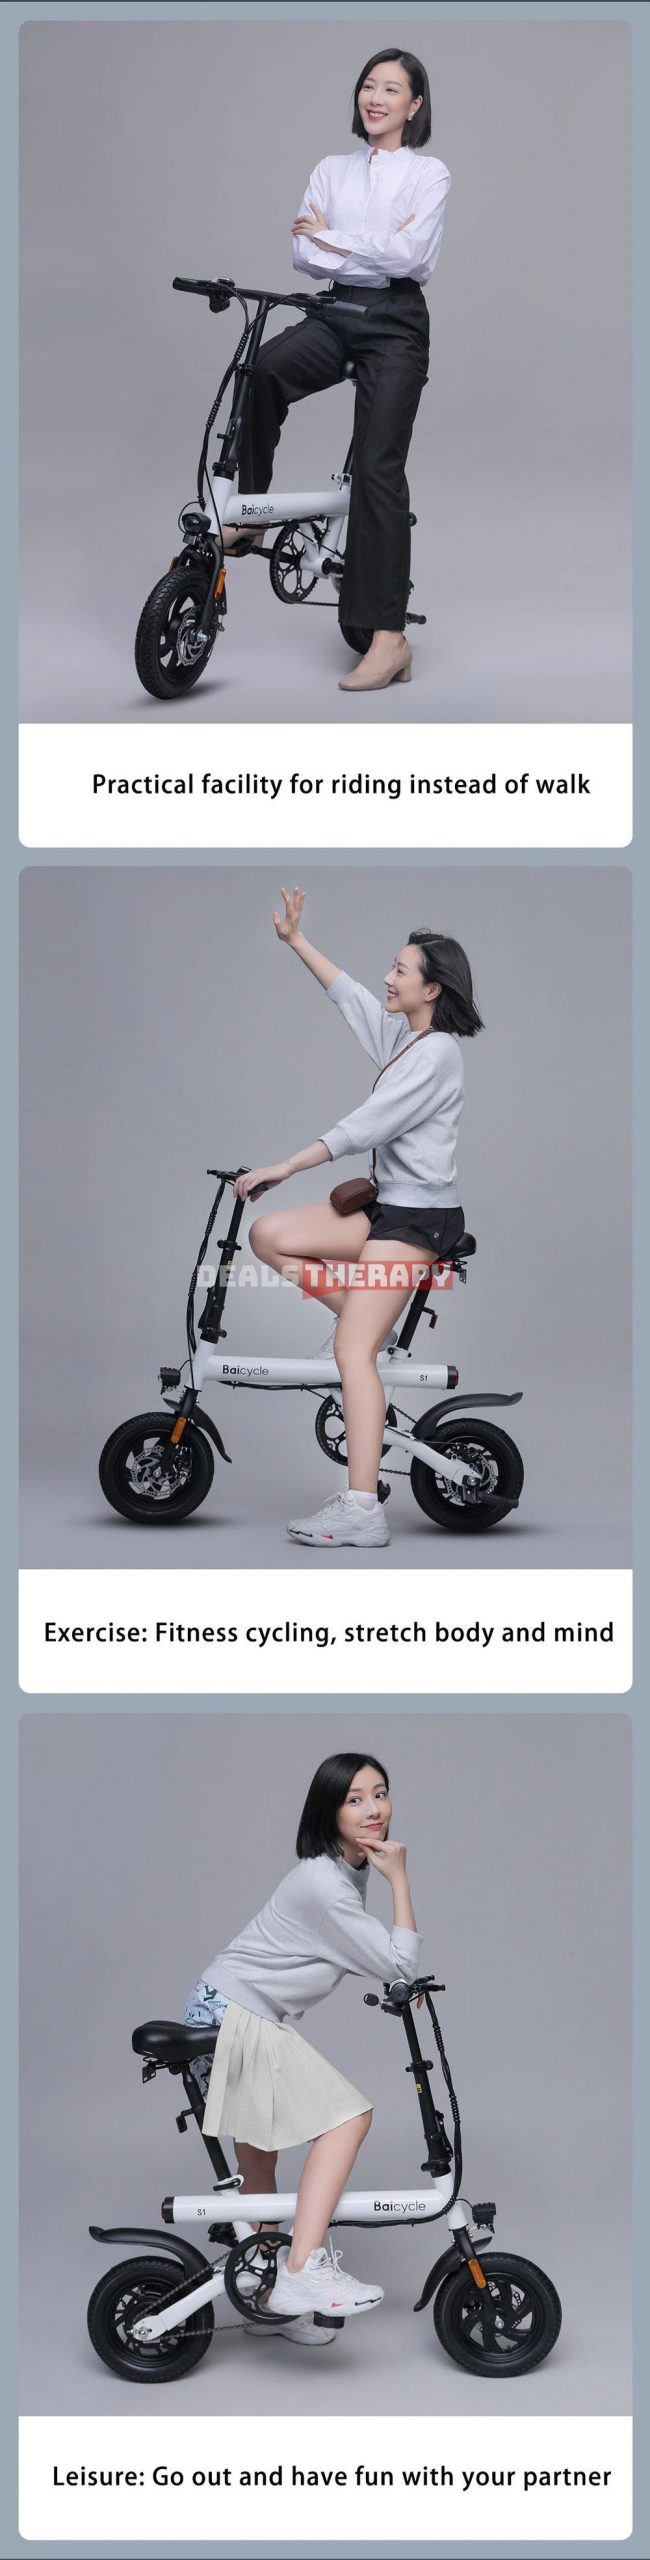 Baicycle Xiaobai S1